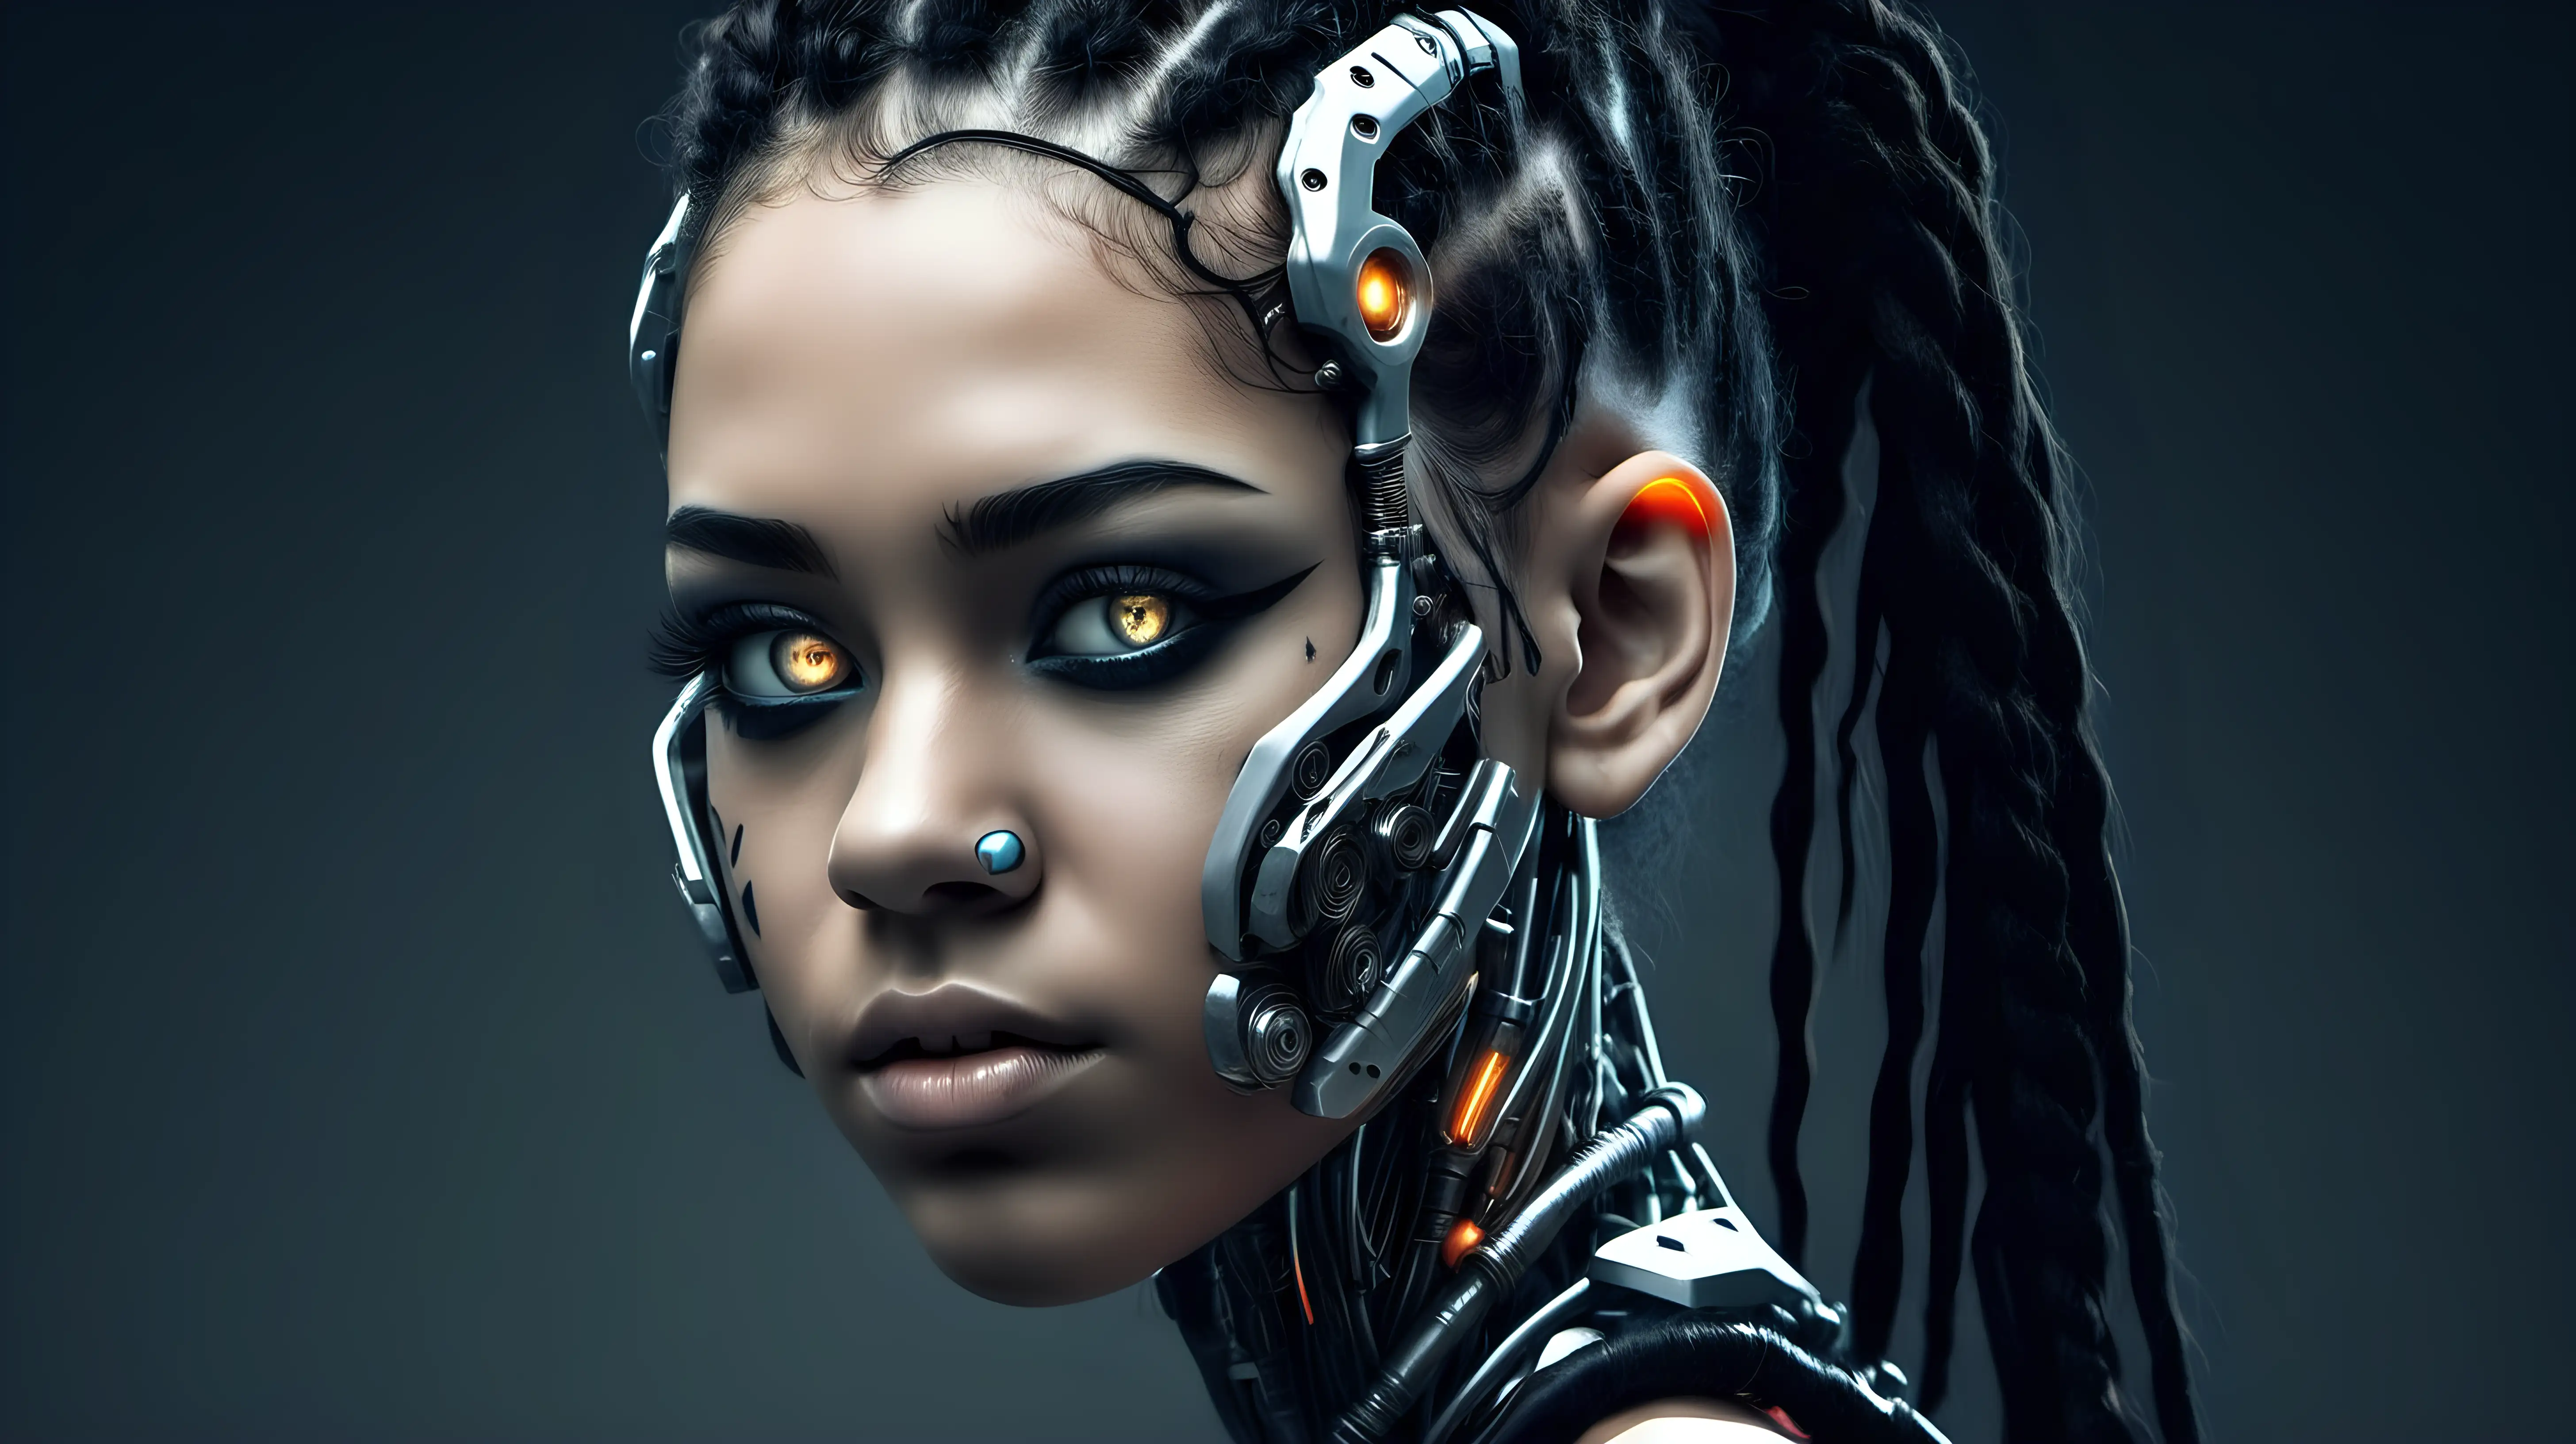 Beautiful Cyborg Woman with Wild Dark Braids